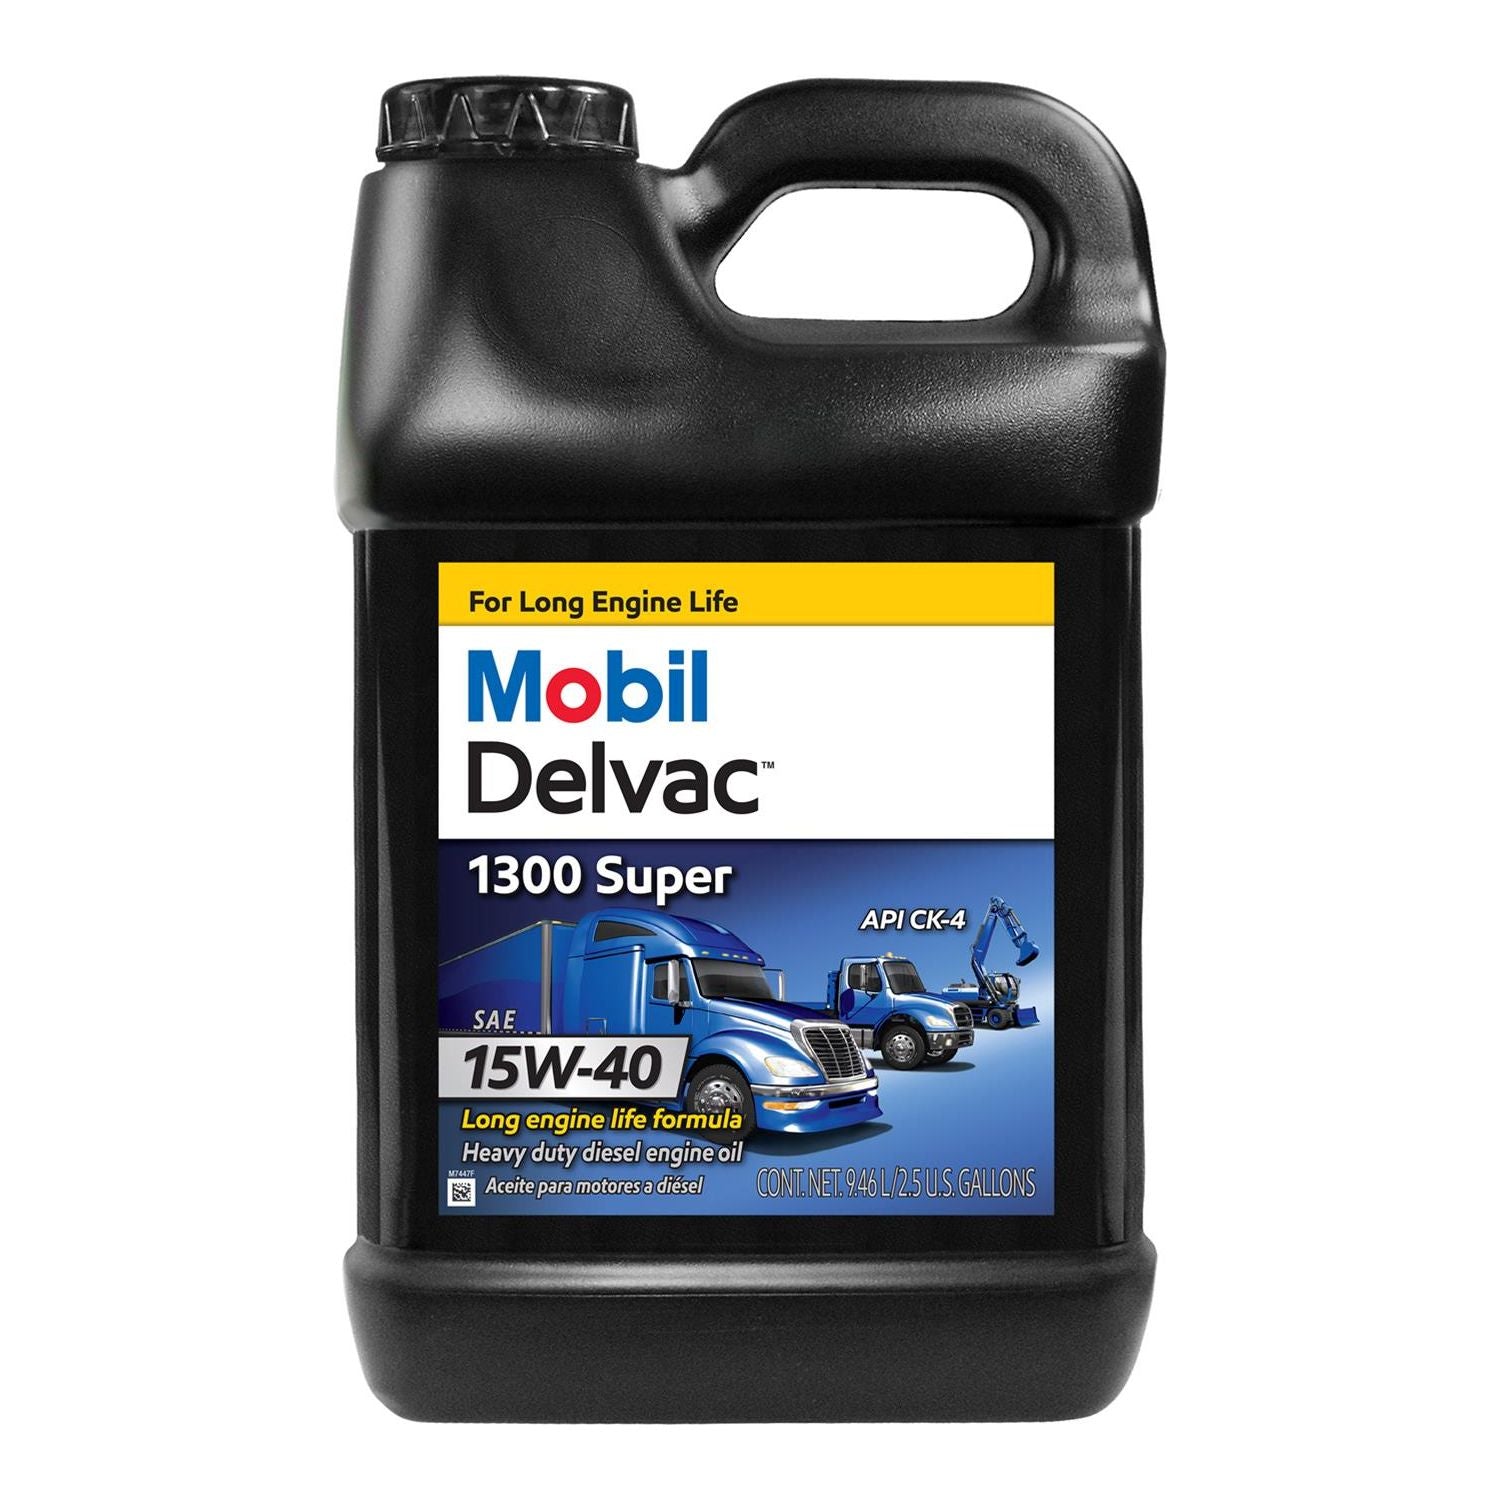 Mobil Delvac 1300 Super Diesel Engine Conventional Engine Oil 15W-40 10 Quart 122493